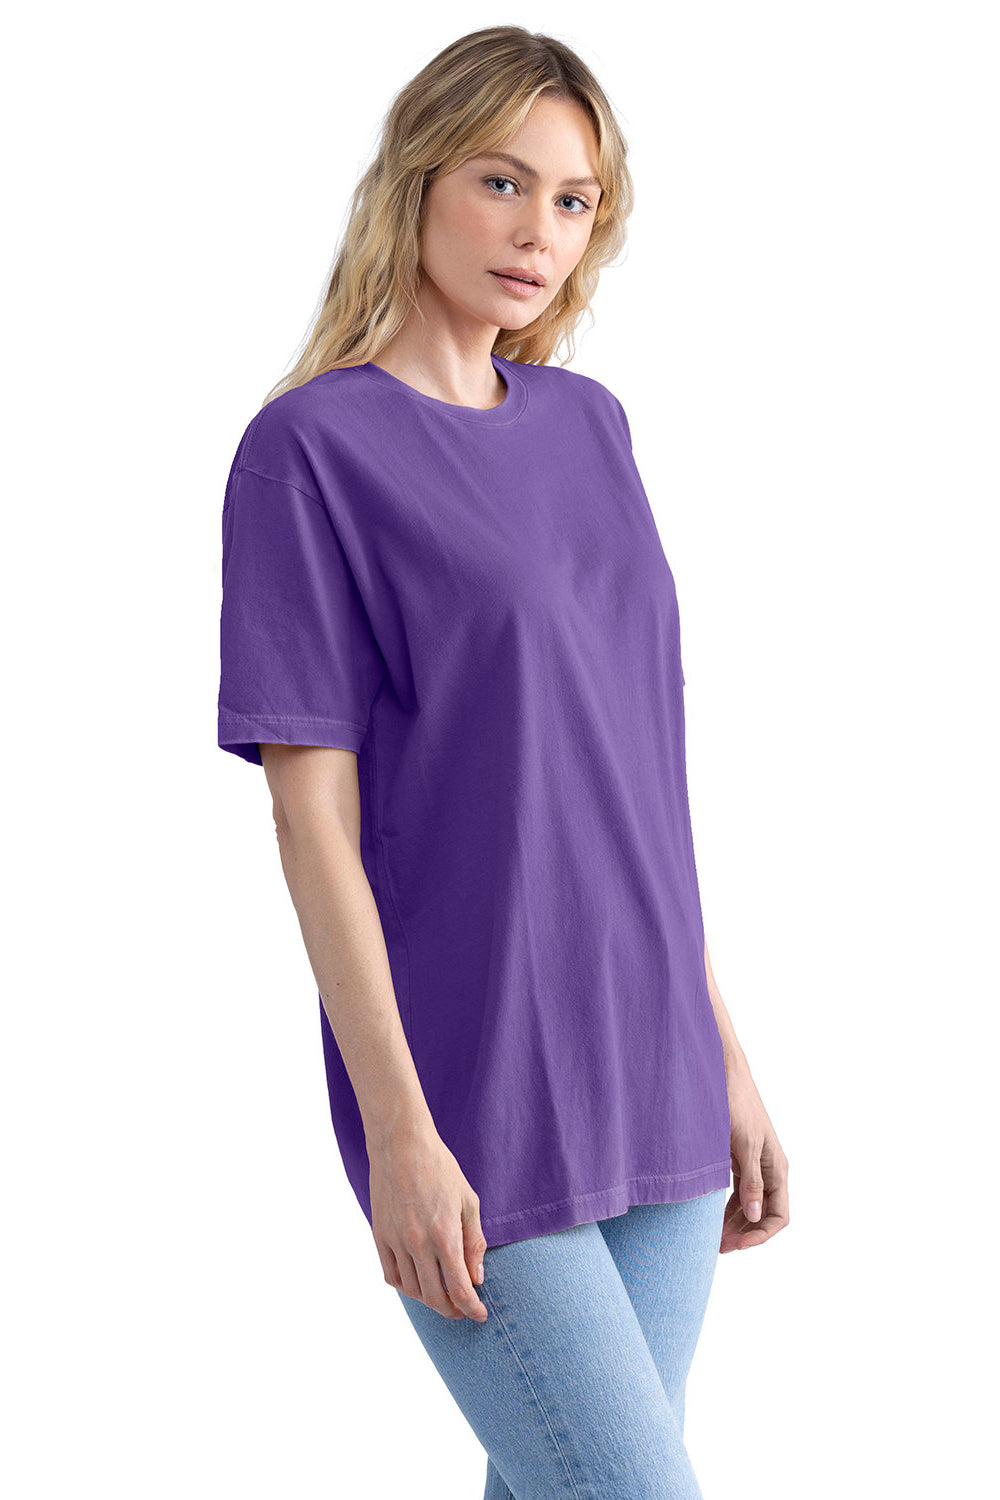 Next Level 3600SW Mens Soft Wash Short Sleeve Crewneck T-Shirt Purple Rush Side